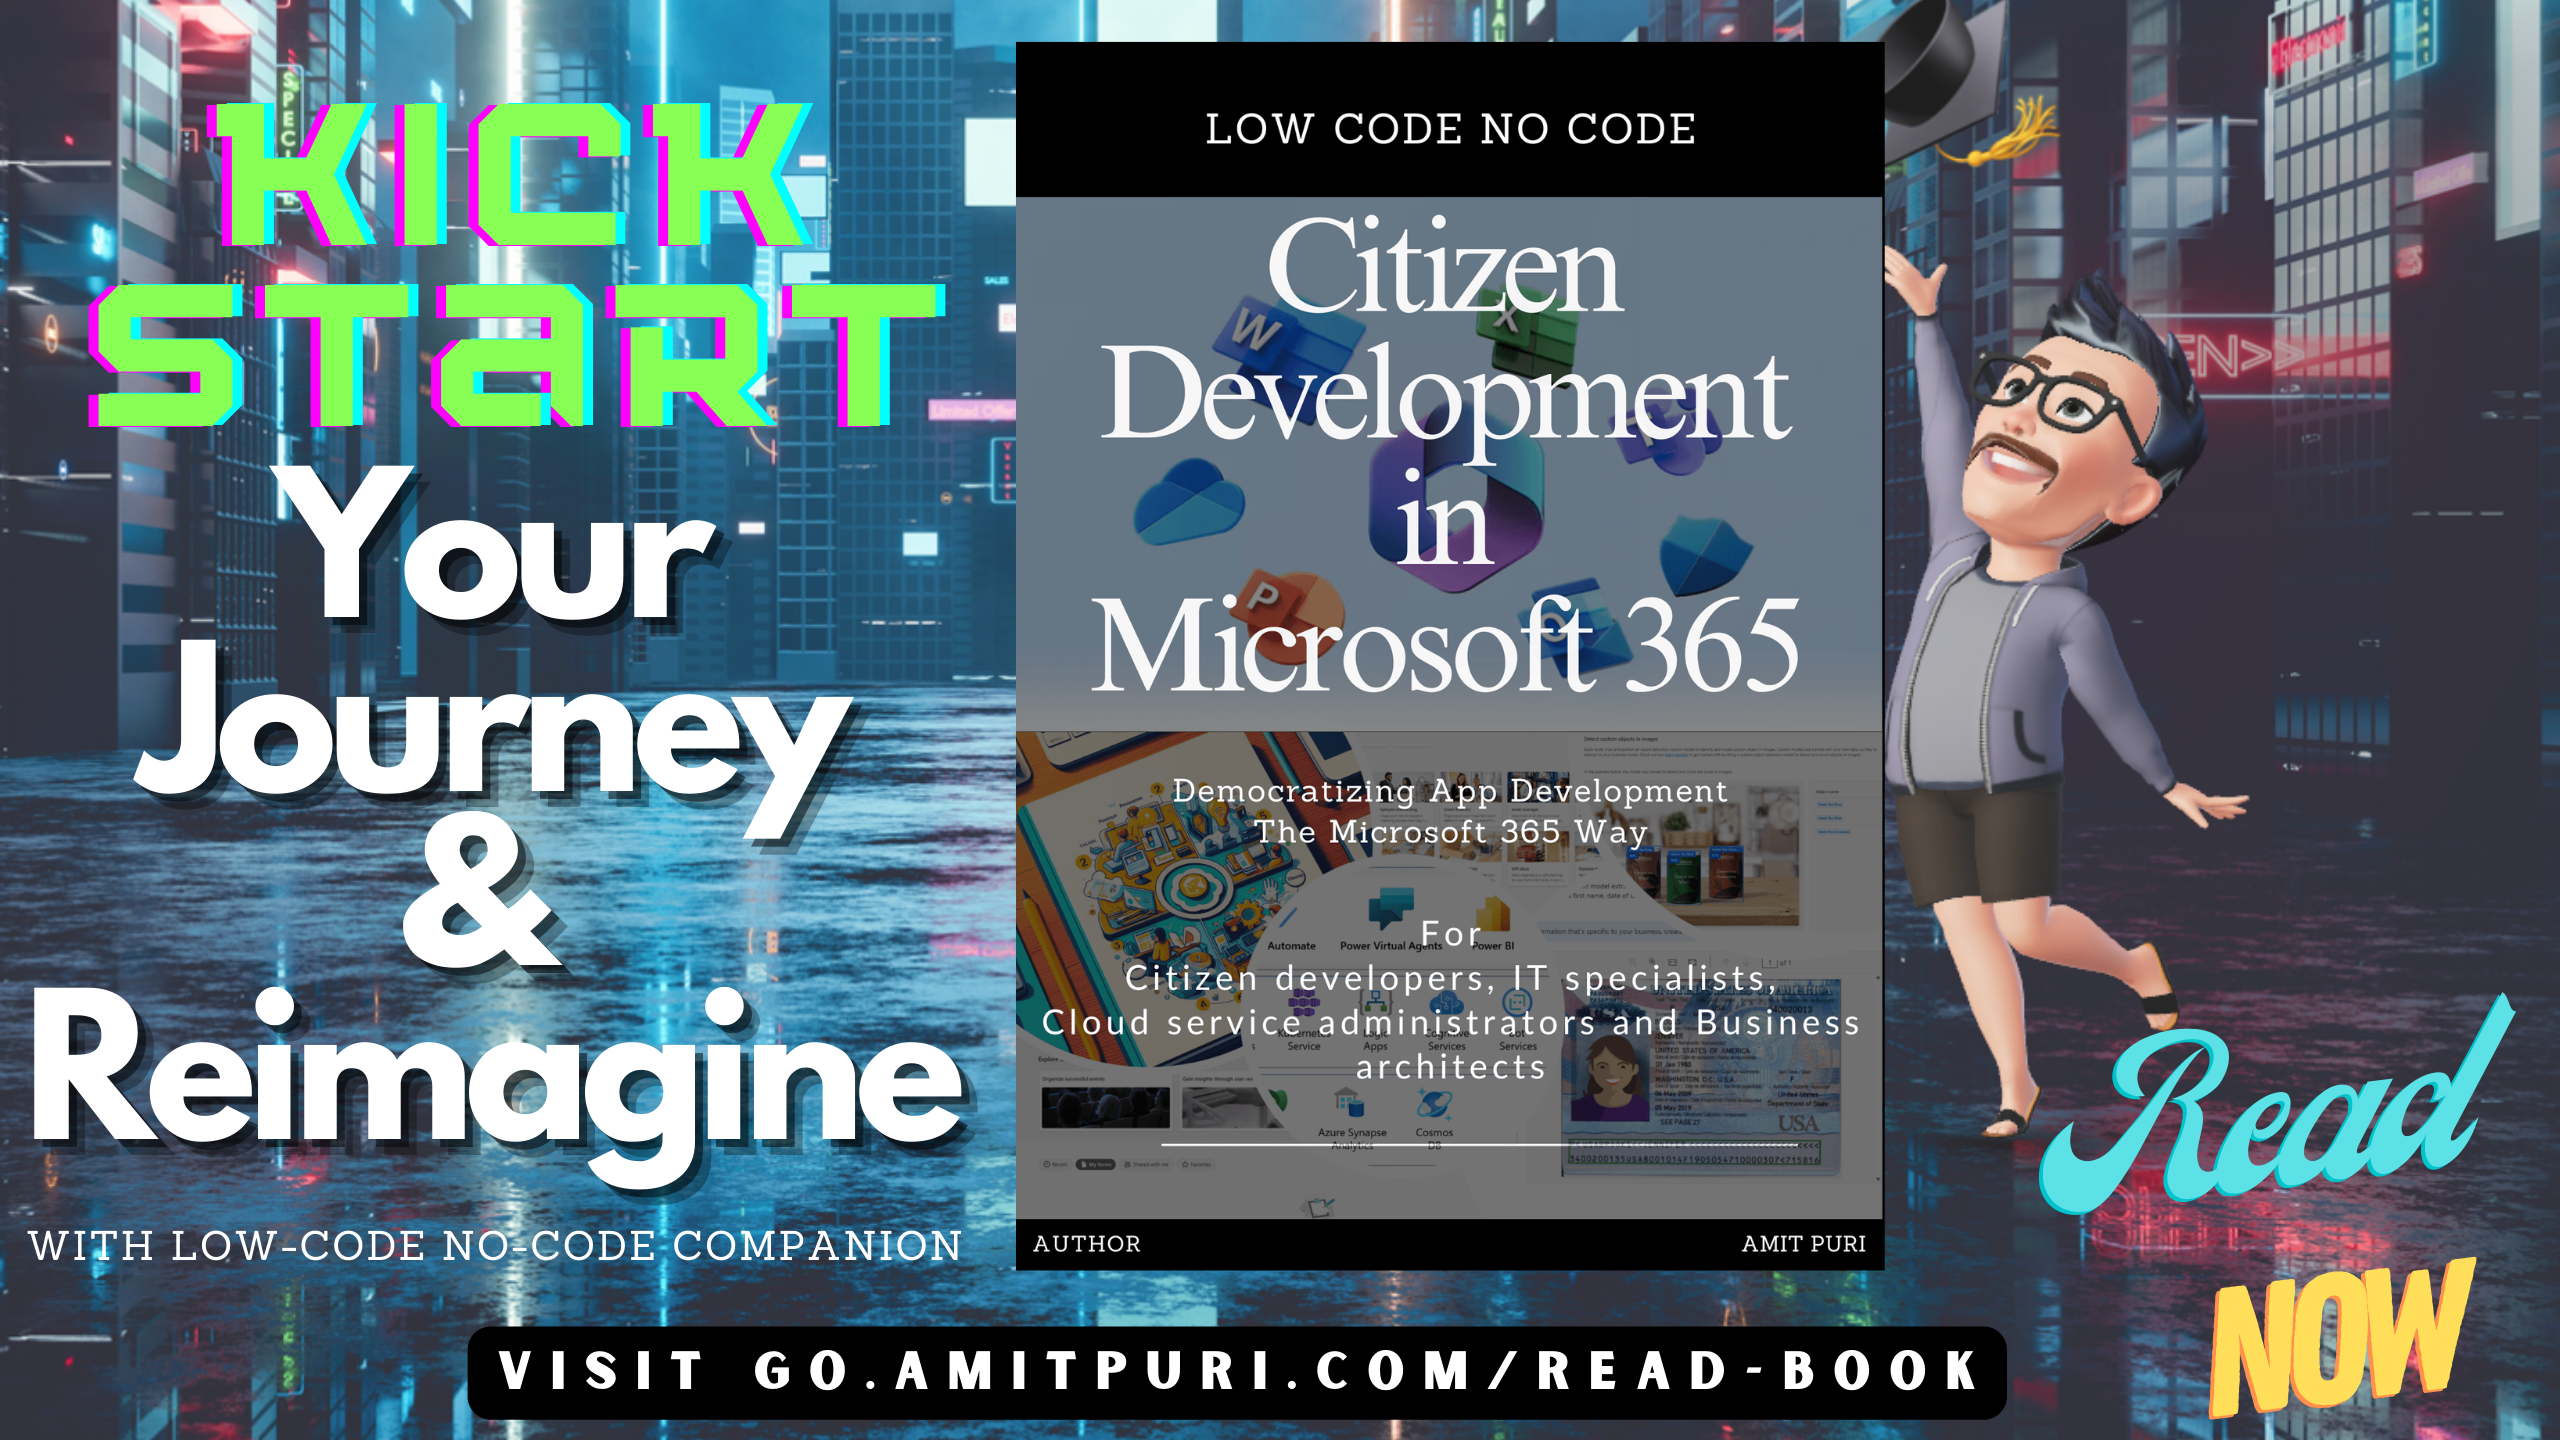 Citizen Development in Microsoft 365 Book Promotion